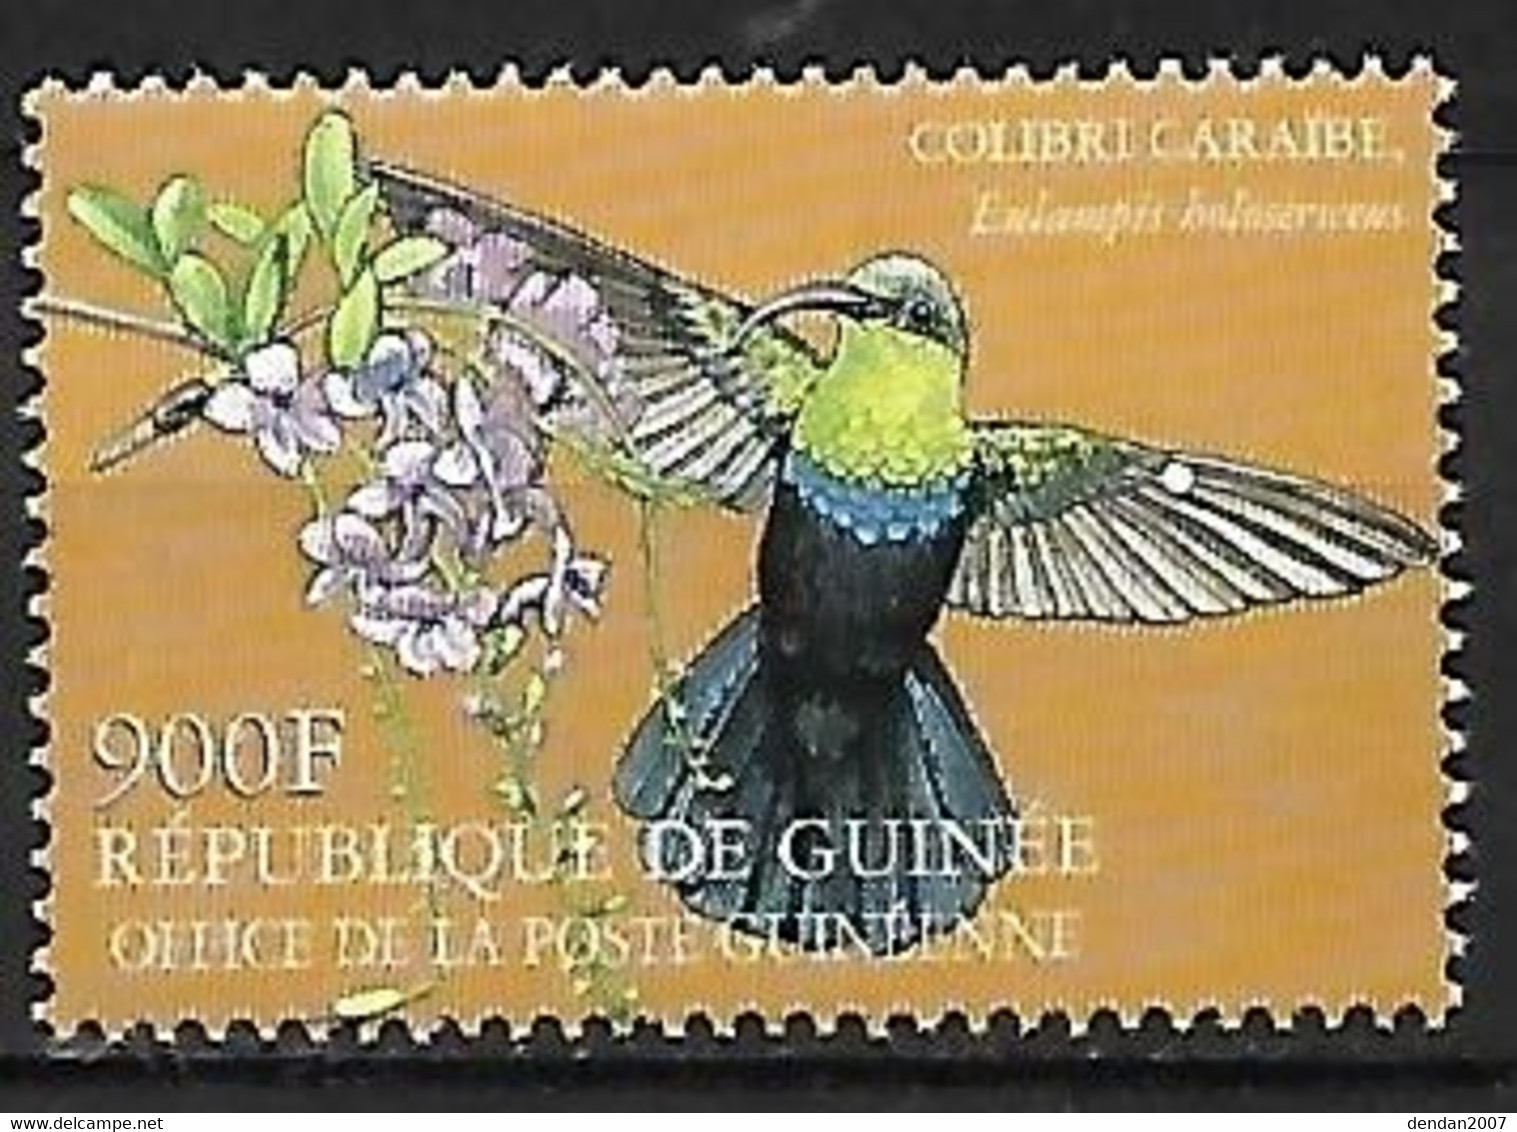 Guinea - MNH ** 2002 :   Green-throated Carib  -  Eulampis Holosericeus - Hummingbirds